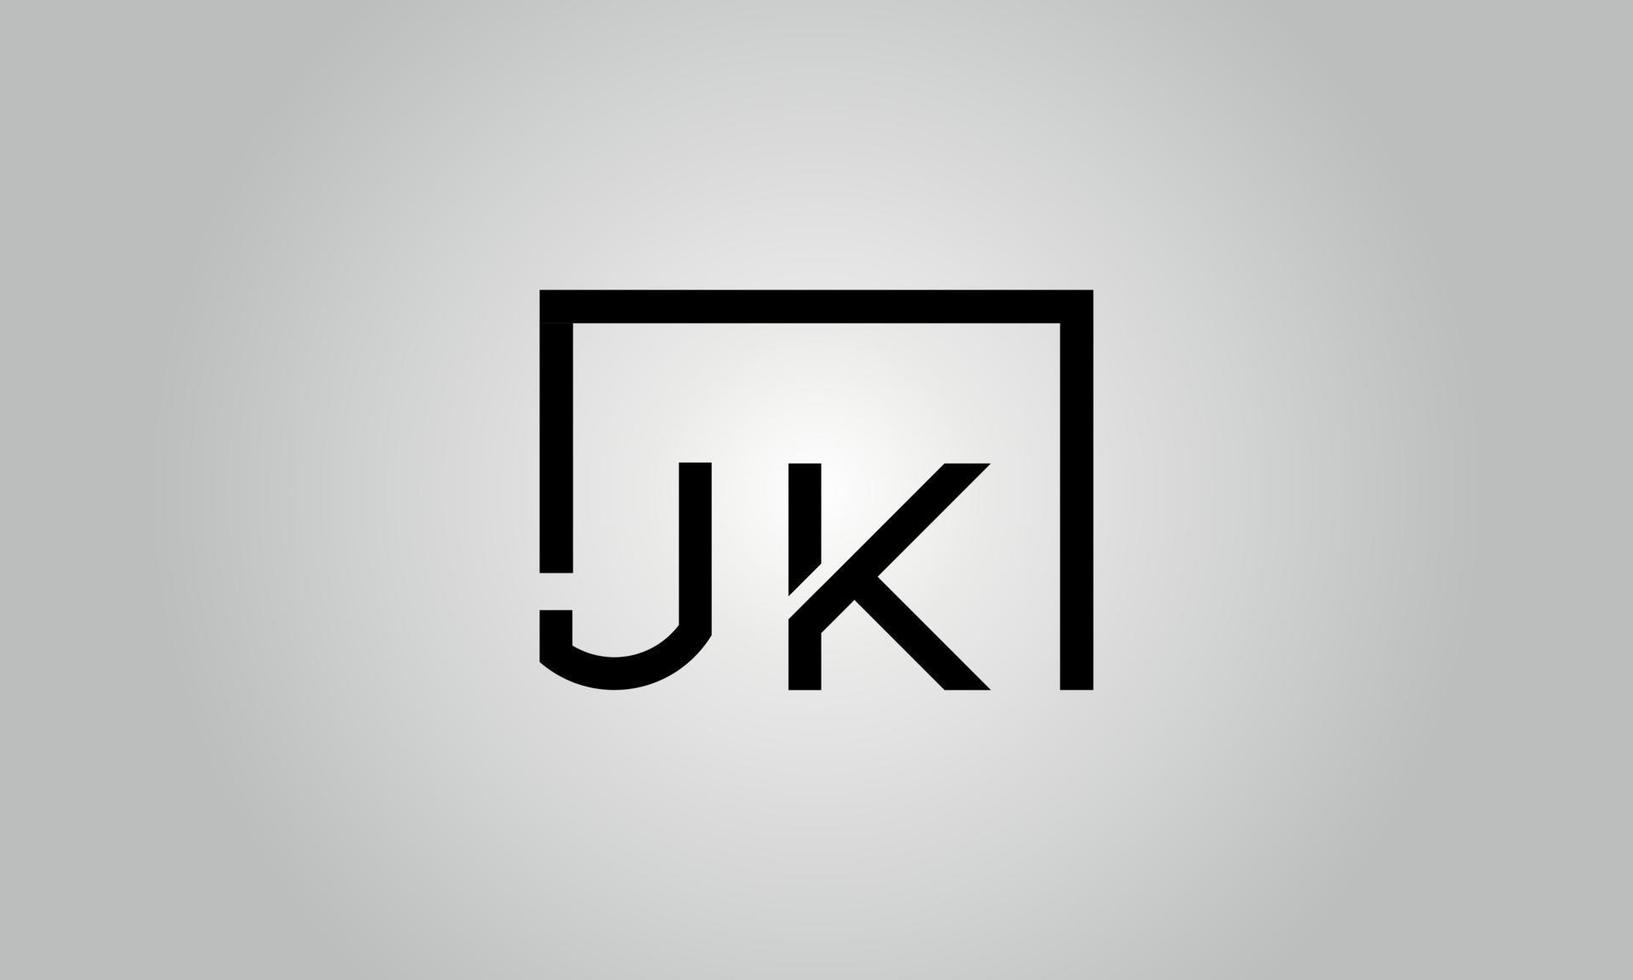 Letter JK logo design. JK logo with square shape in black colors vector free vector template.